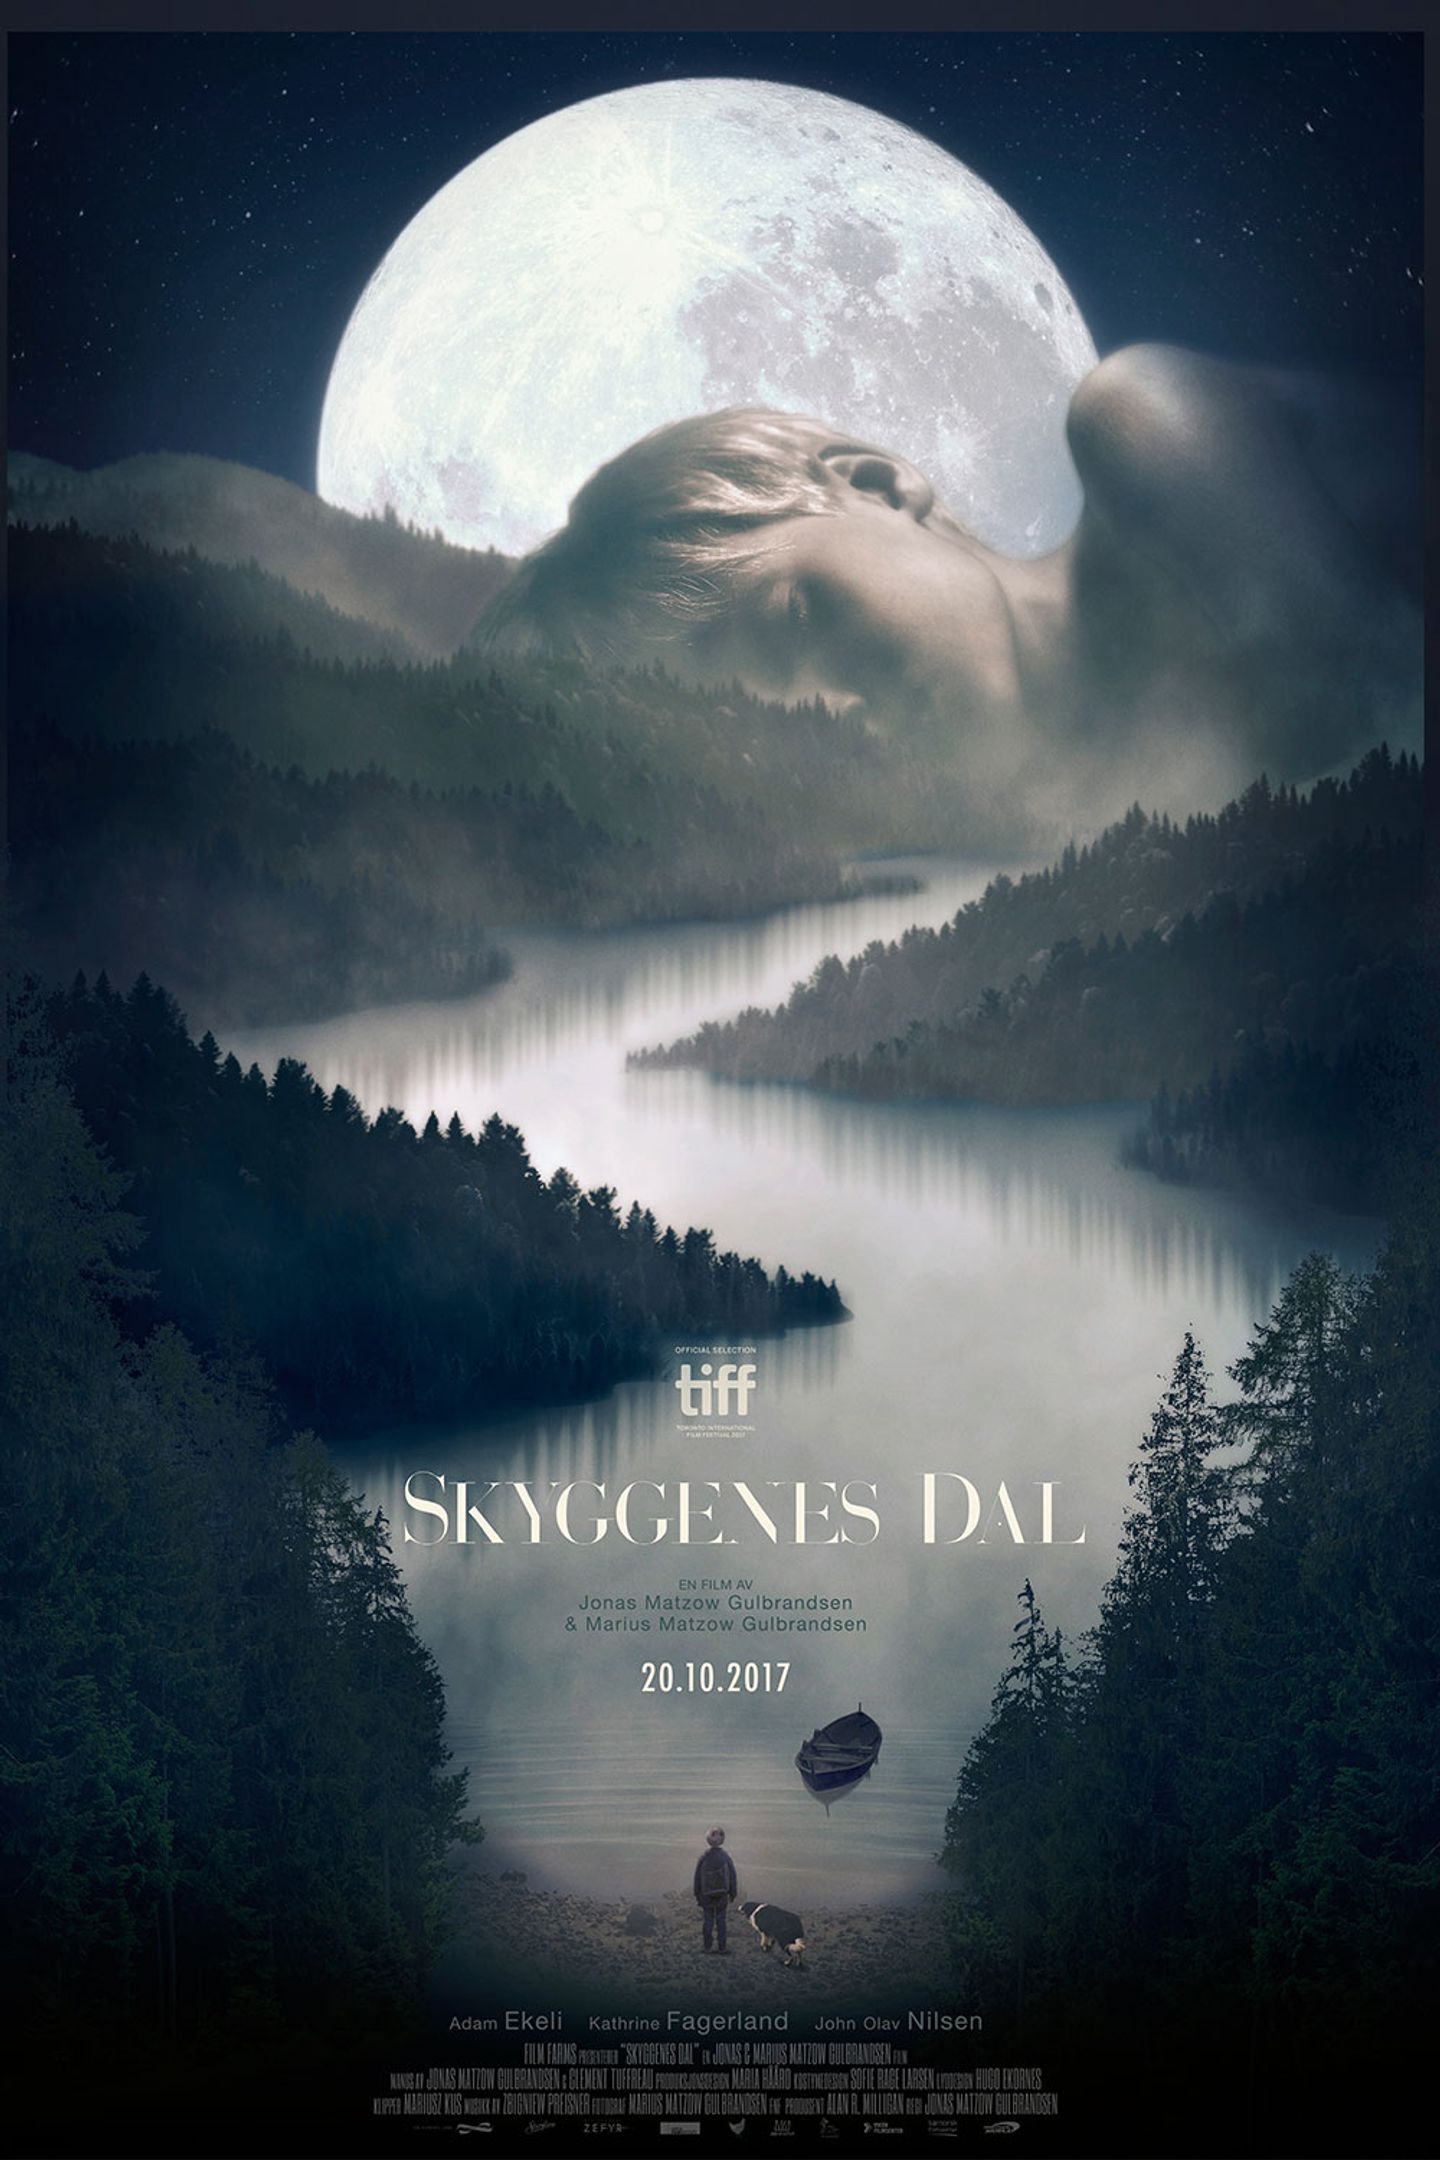 Plakat for 'Skyggenes dal'